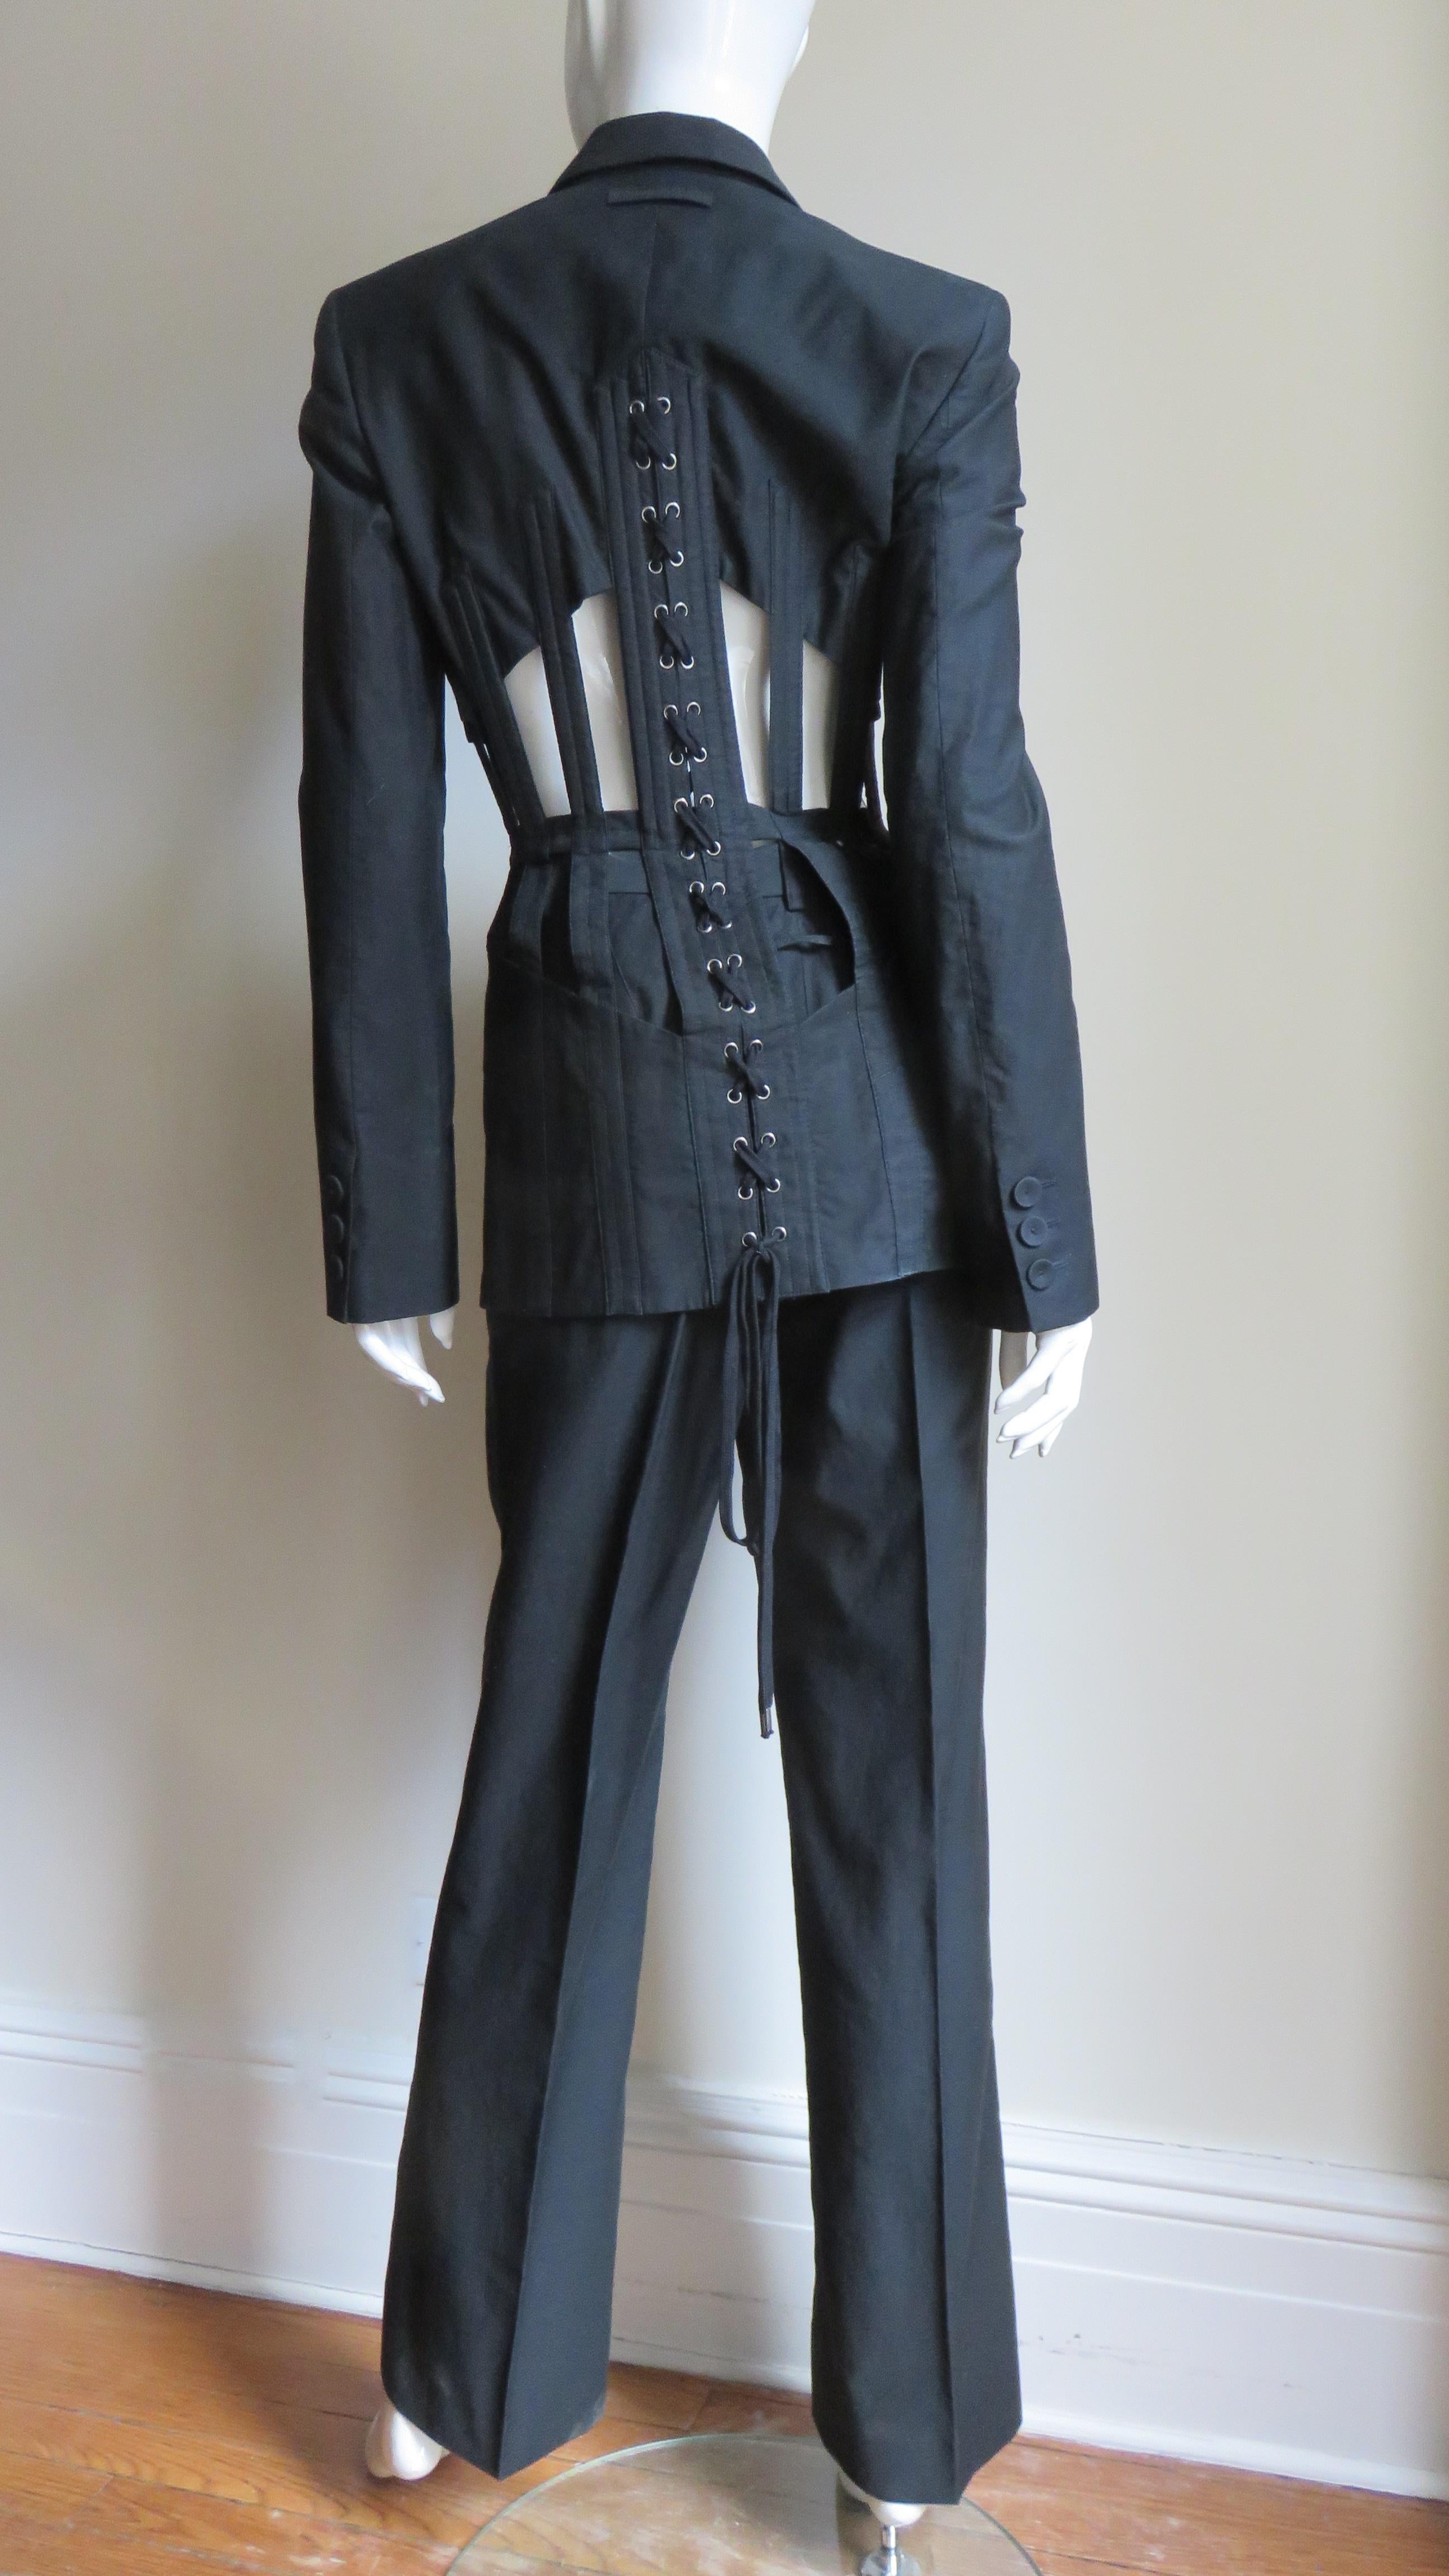 Jean Paul Gaultier Iconic Cage Corset lace up Jacket Pant Suit S/S 1989 For Sale 14